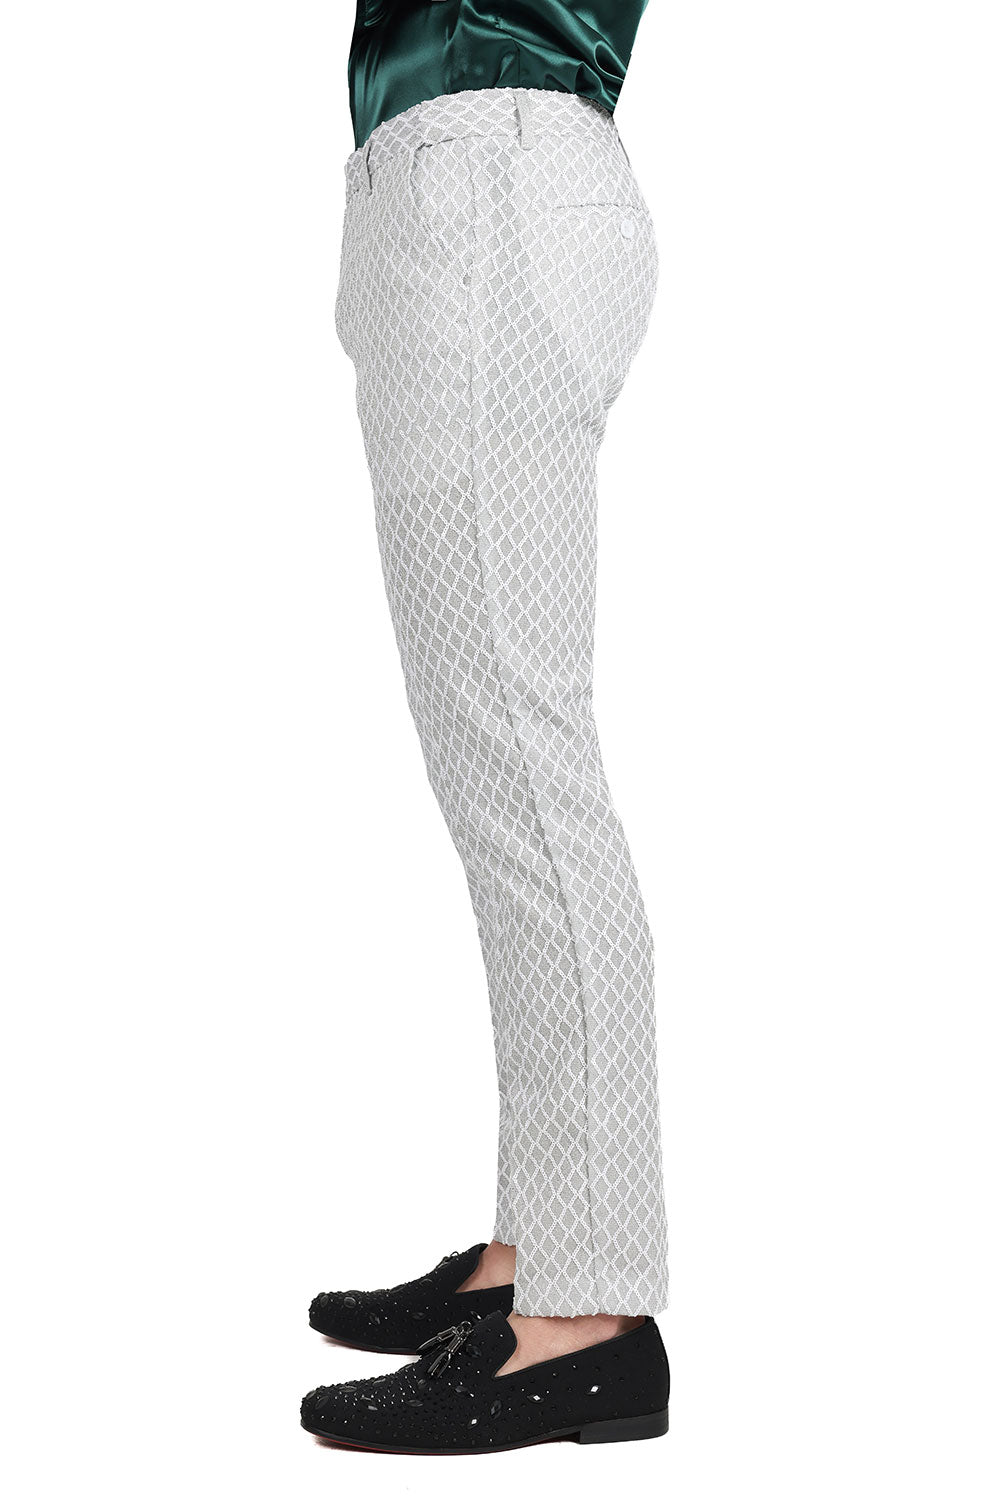 Barabas Men's Sequin Diamond Design Shiny Chino Pants 2CP3099 White